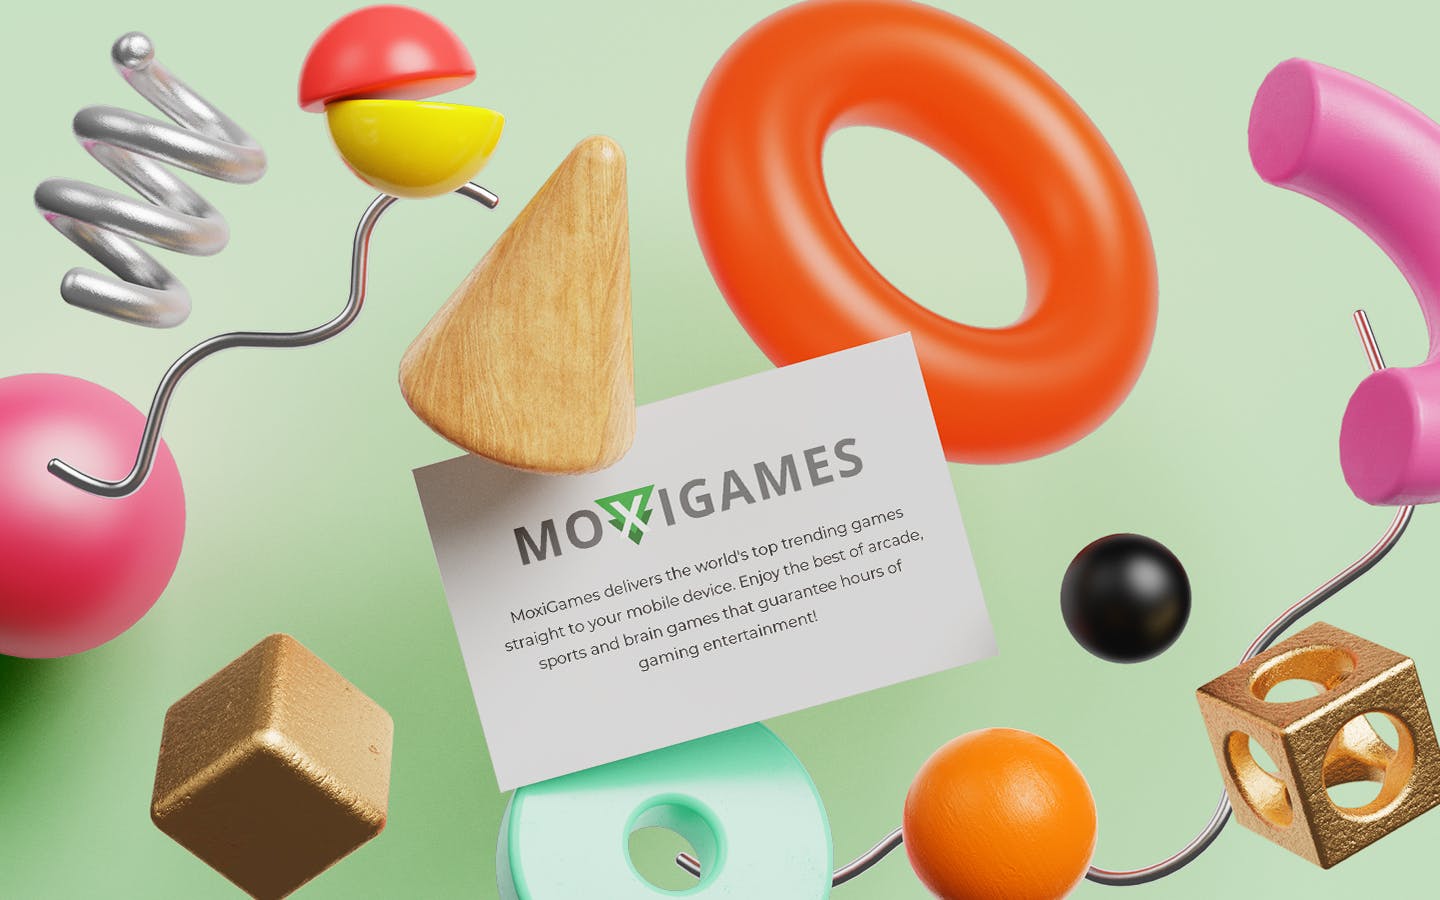 Moxi Games